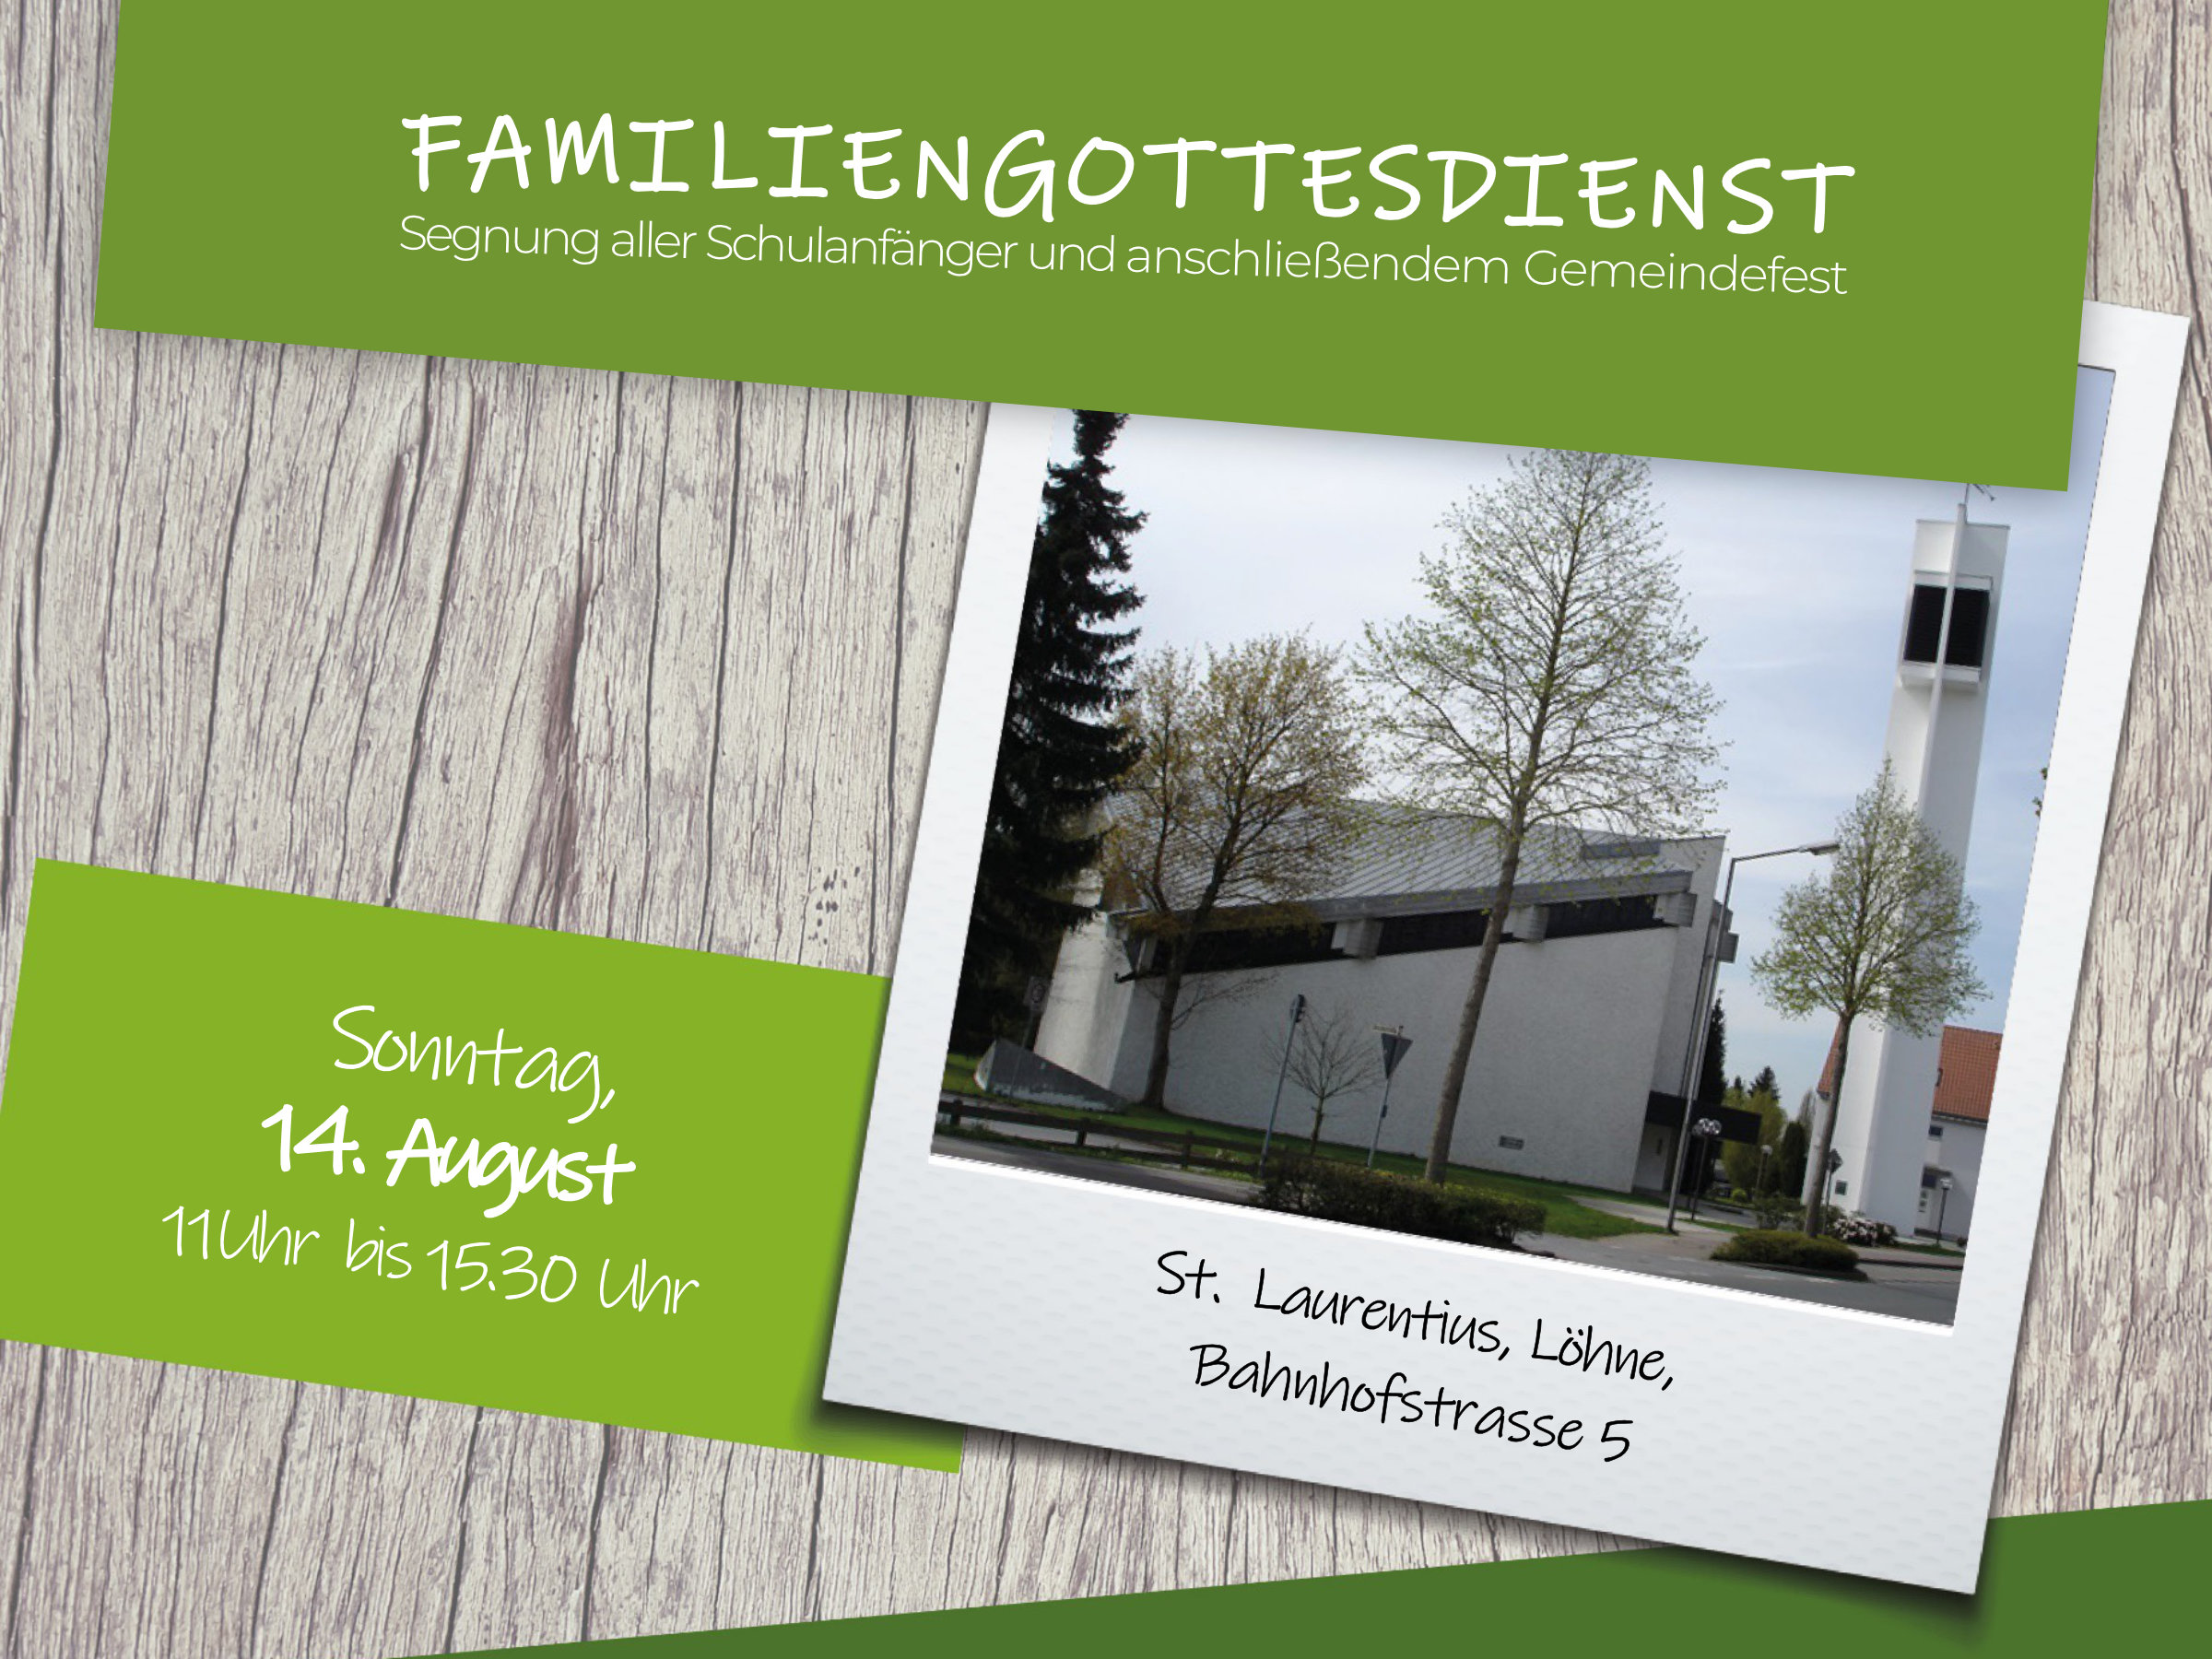 Familiengottesdienst St. Laurentius Löhne